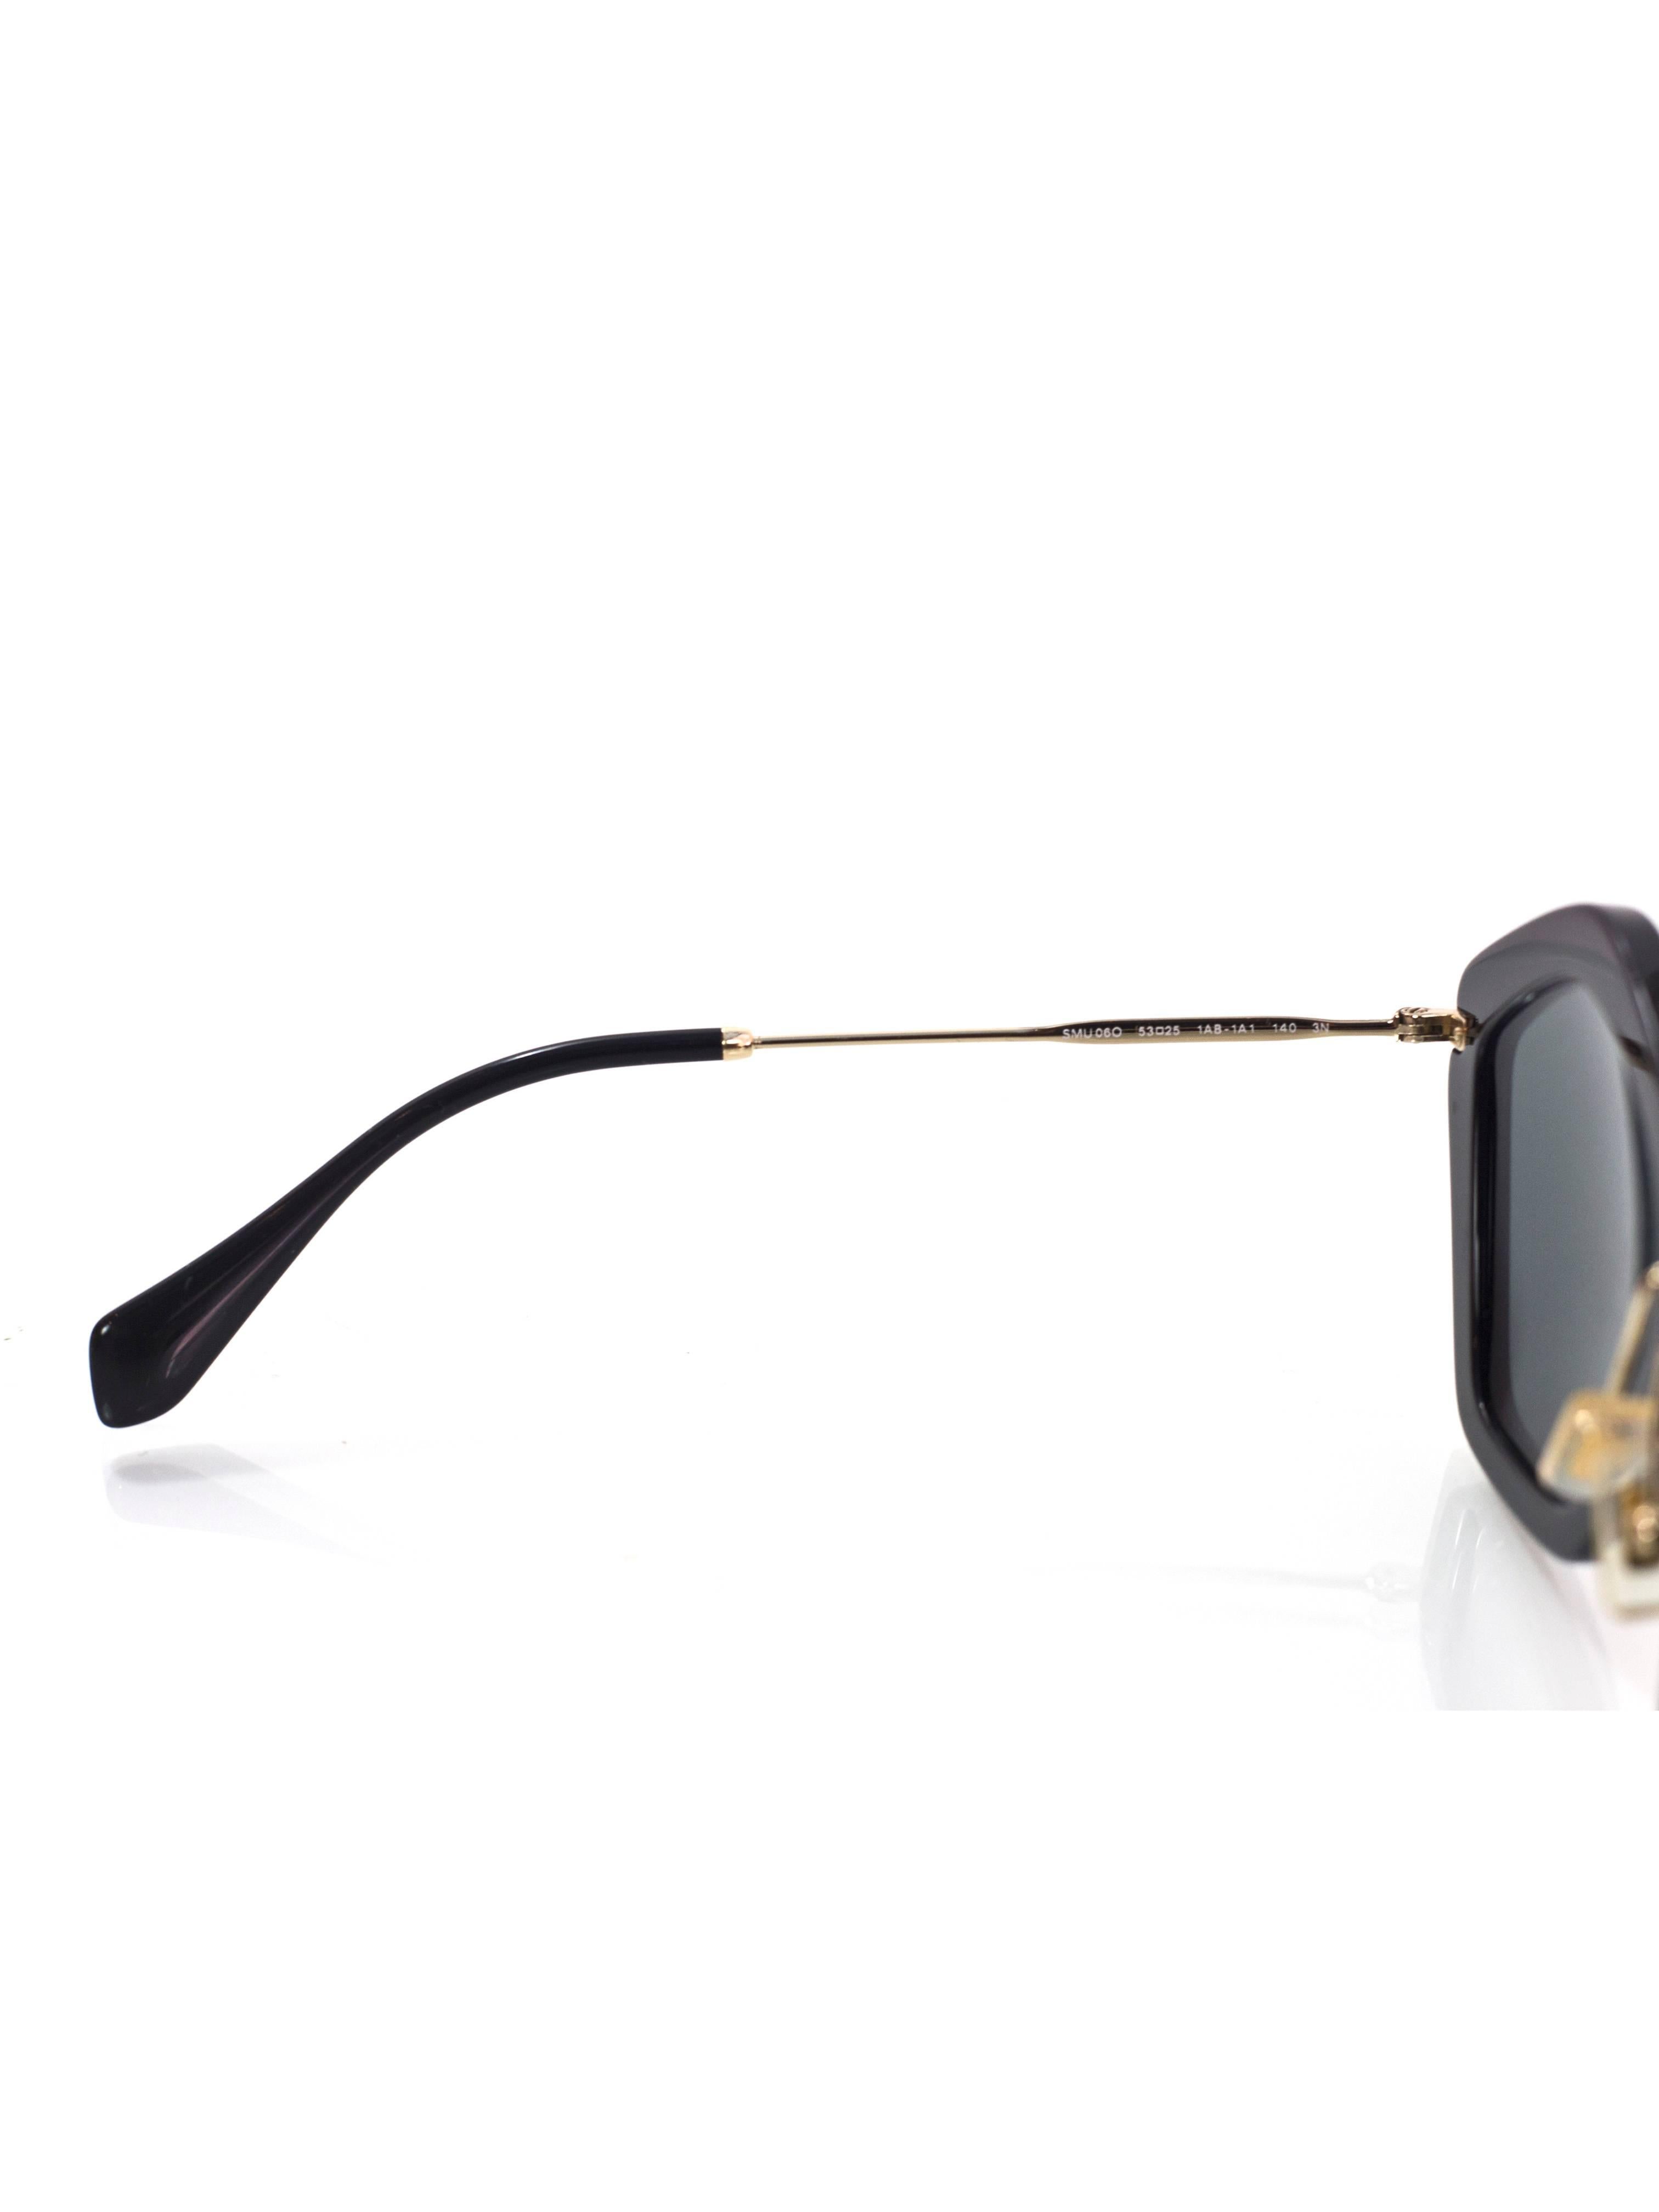 Women's Miu Miu Black and Goldtone Noir Geometric Sunglasses with Case rt. $430